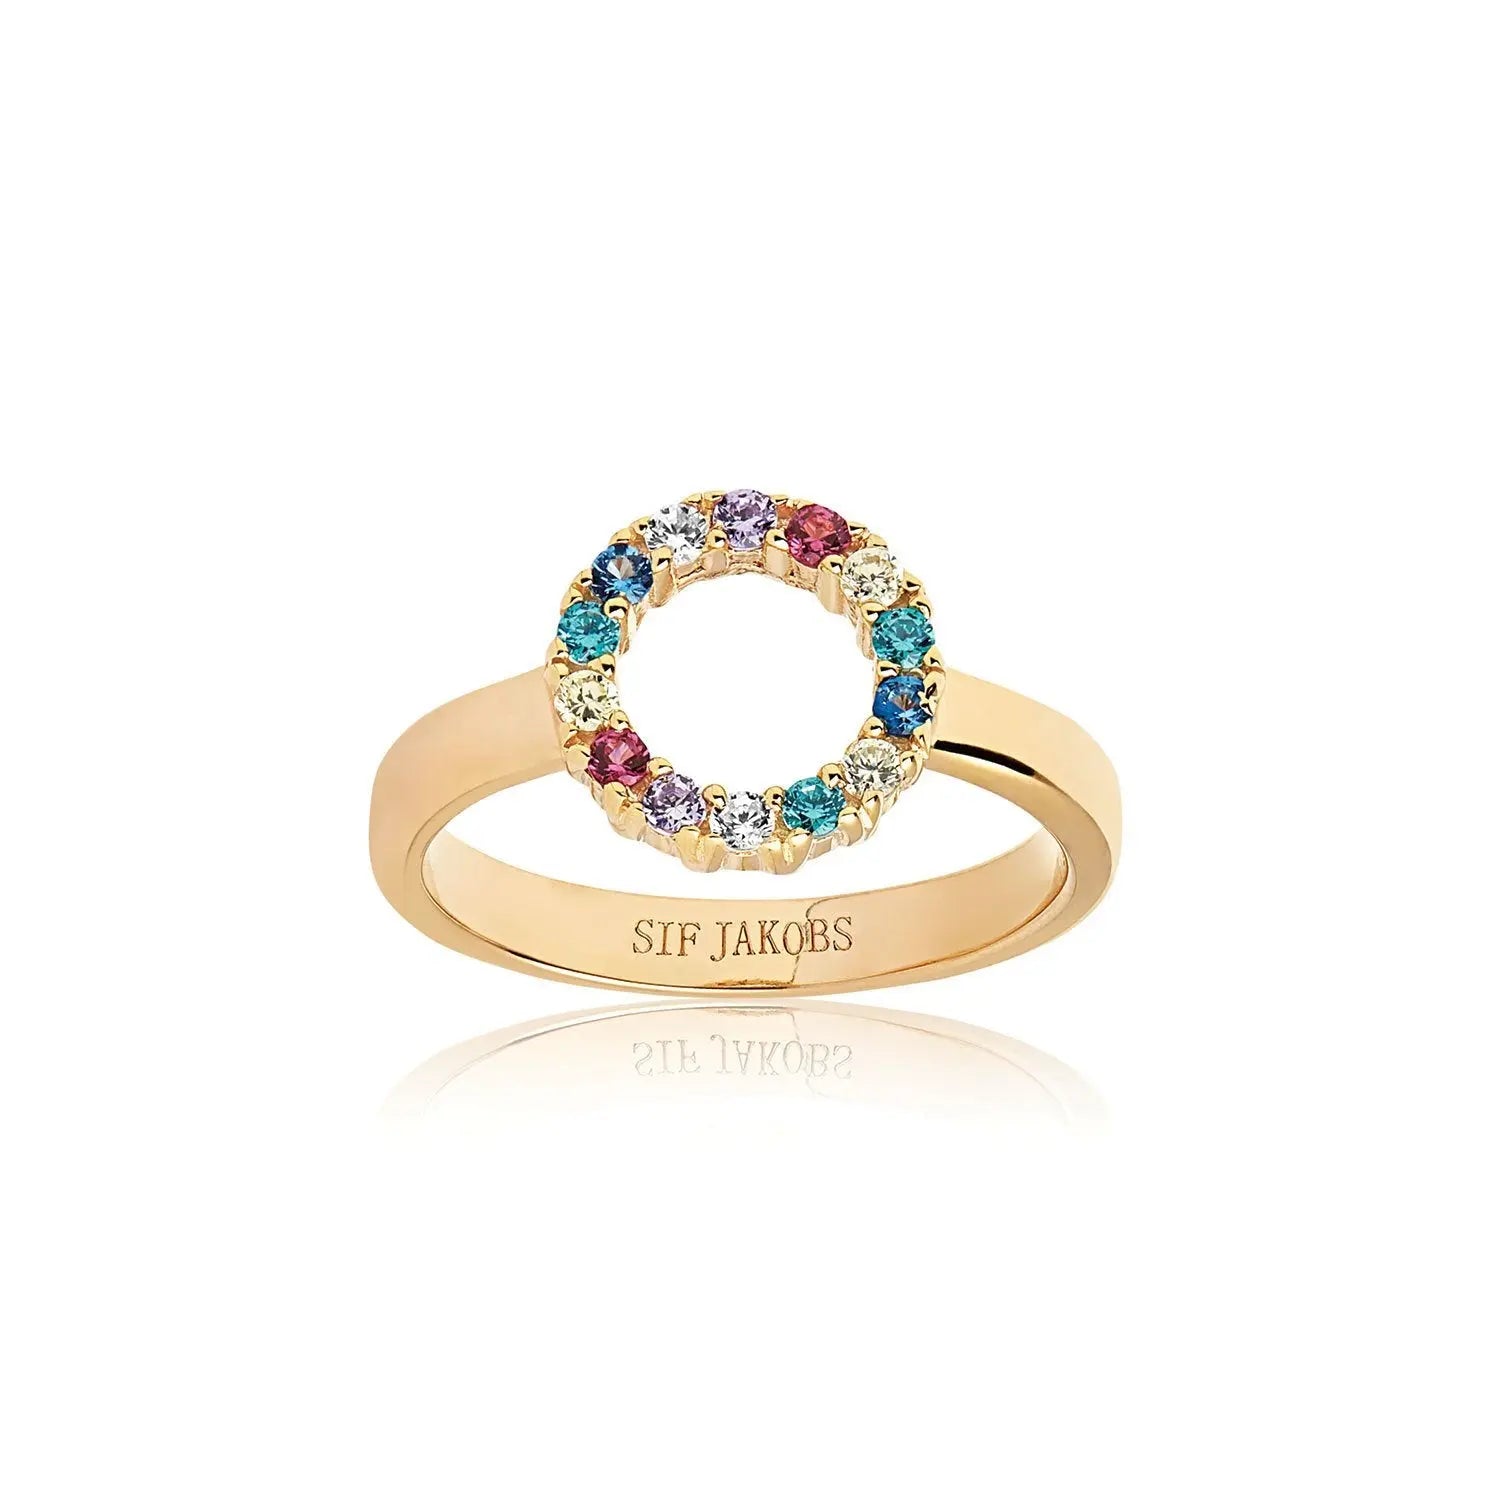 Biella Piccolo Ring - Forgyldt fra Sif Jakobs Jewellery